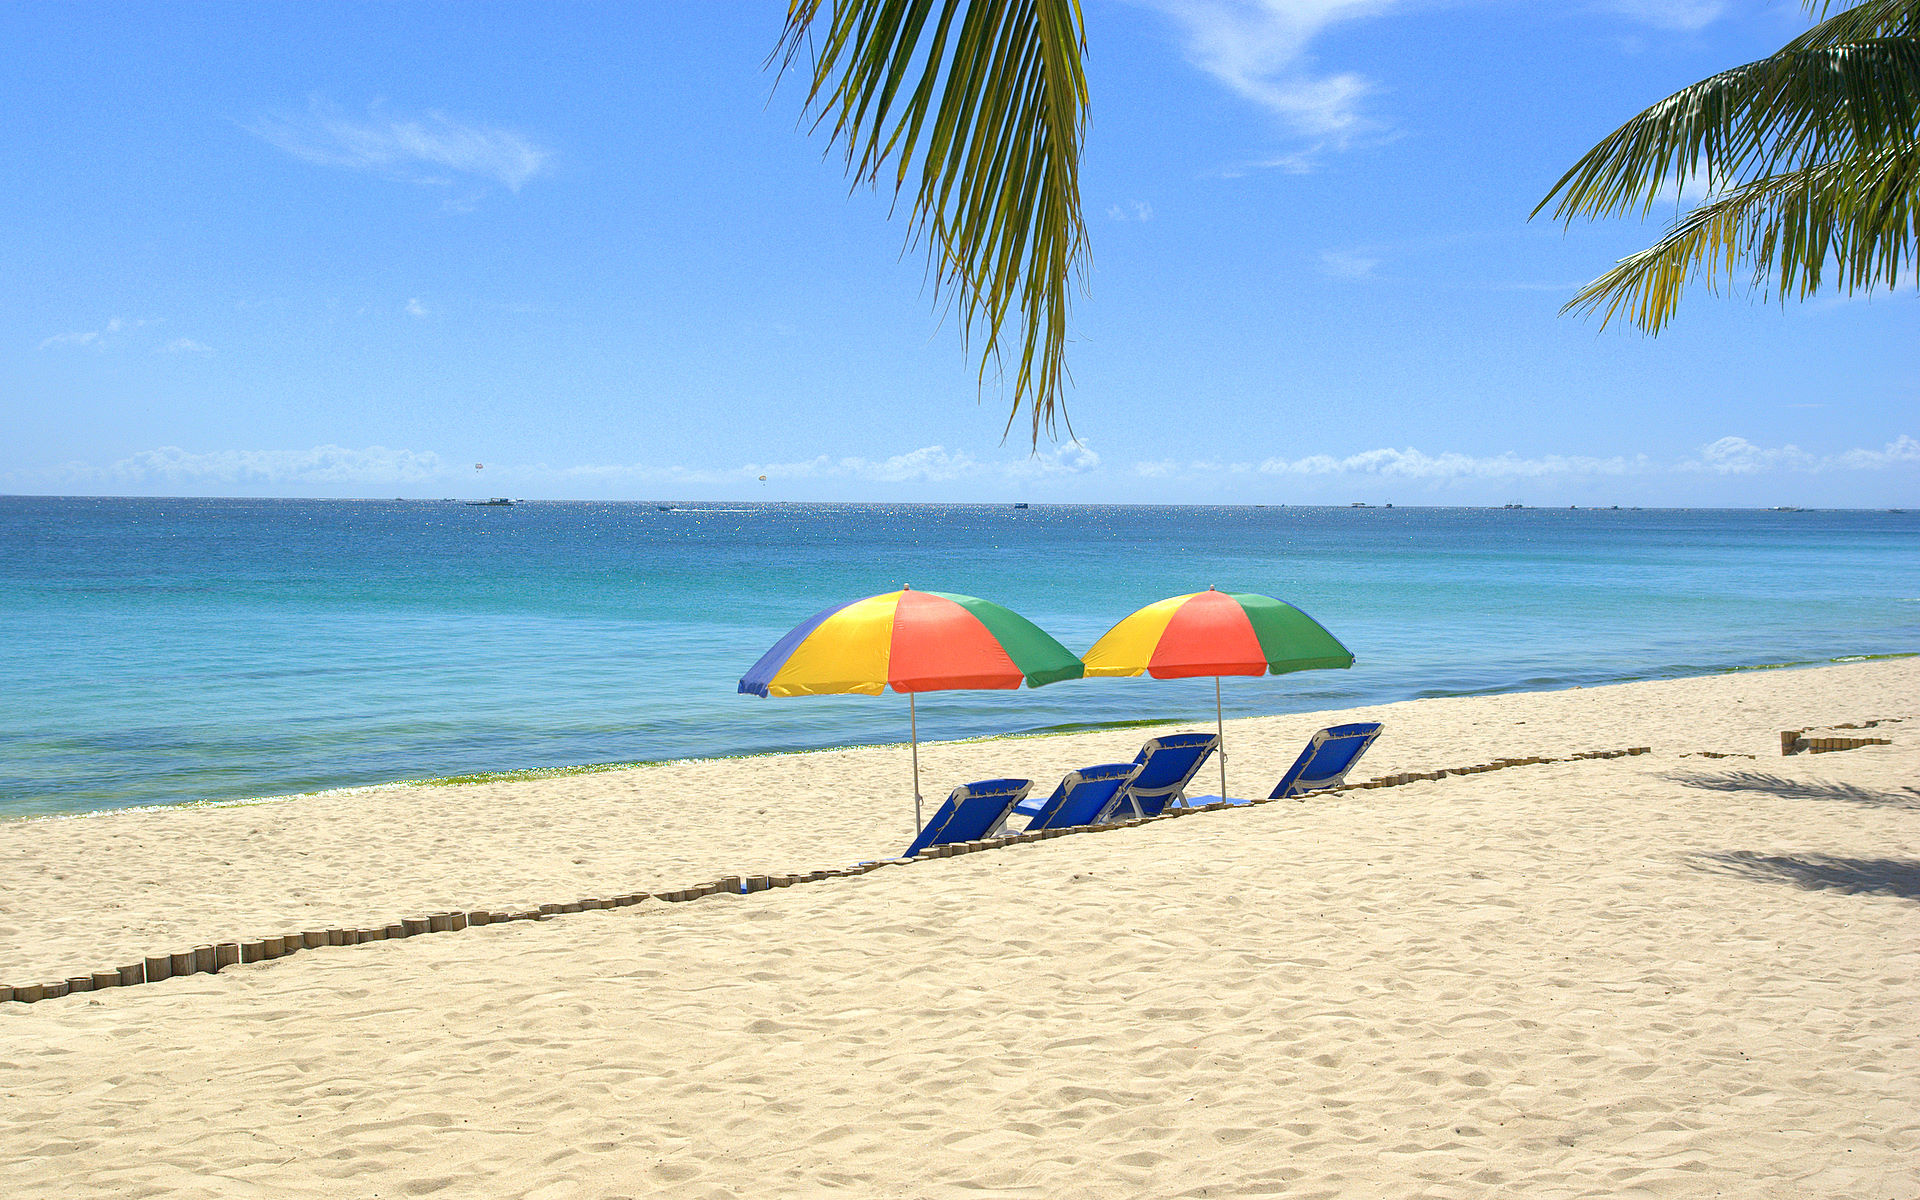 Beach Umbrella: A structure designed to provide cover from the sun. 1920x1200 HD Wallpaper.